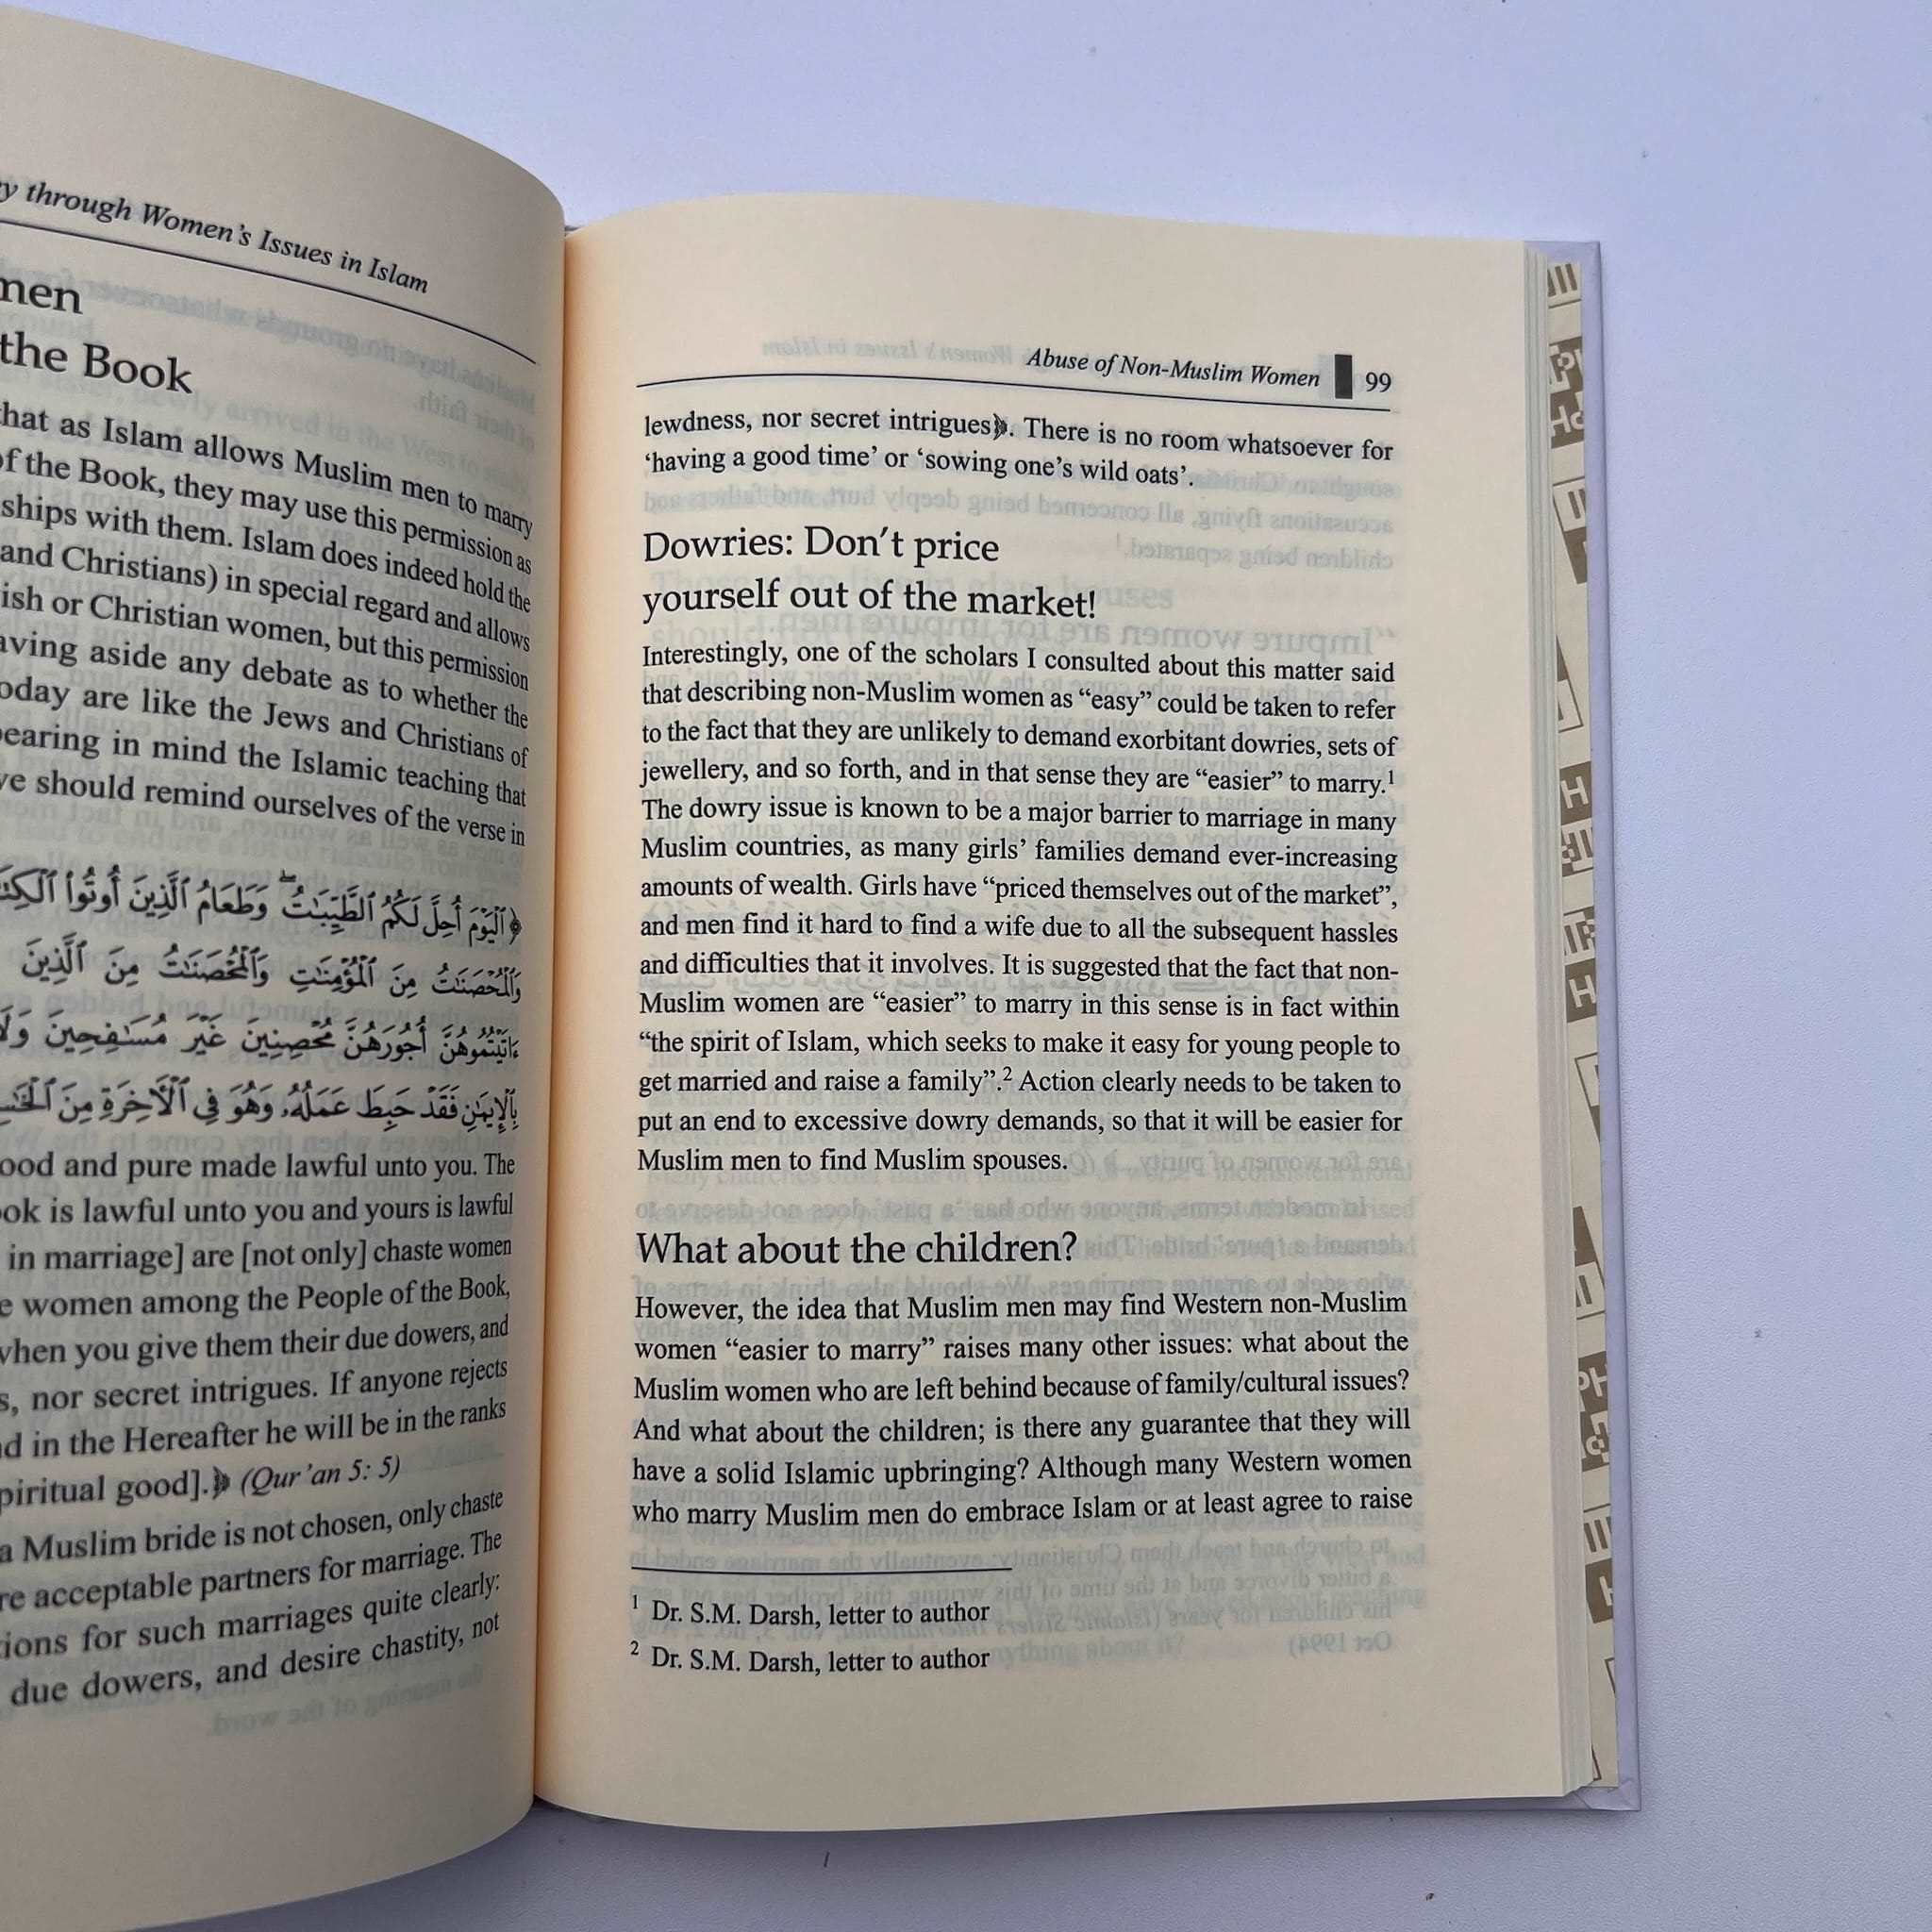 Bent Rib - Islamic Book - Fajr Noor